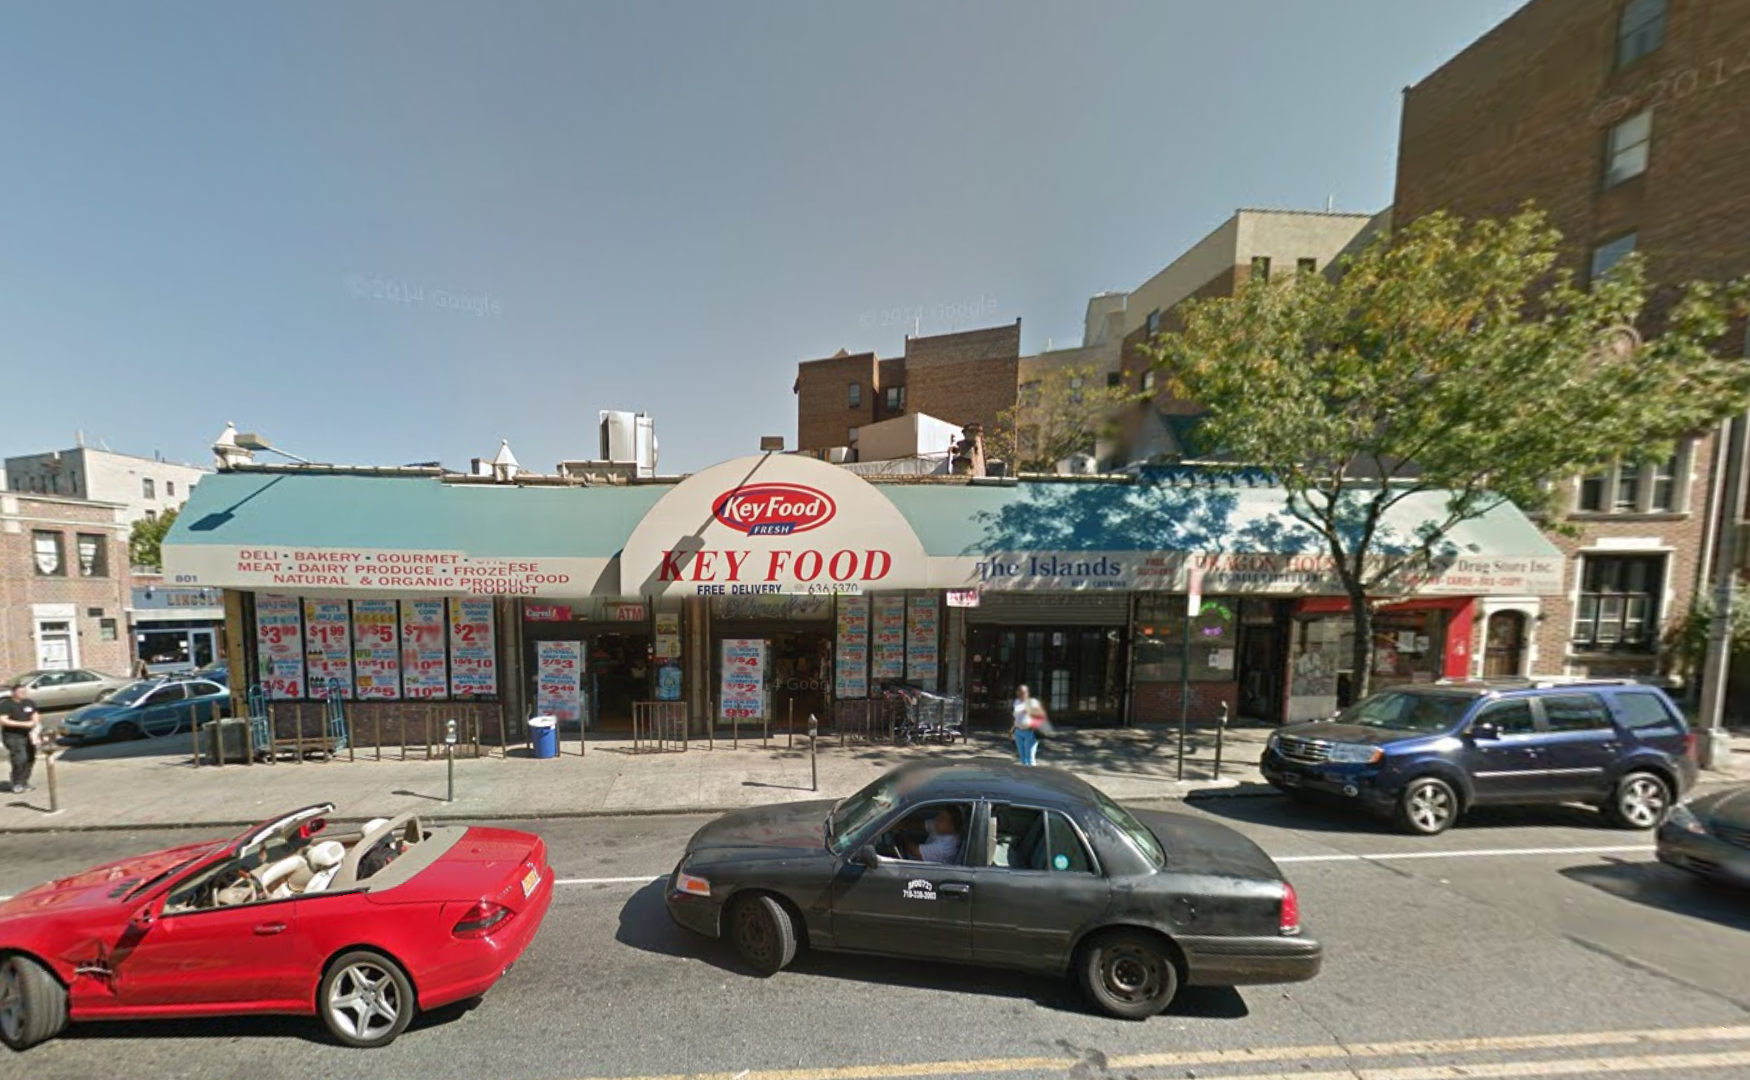 805 Washington Avenue, image via Google Maps